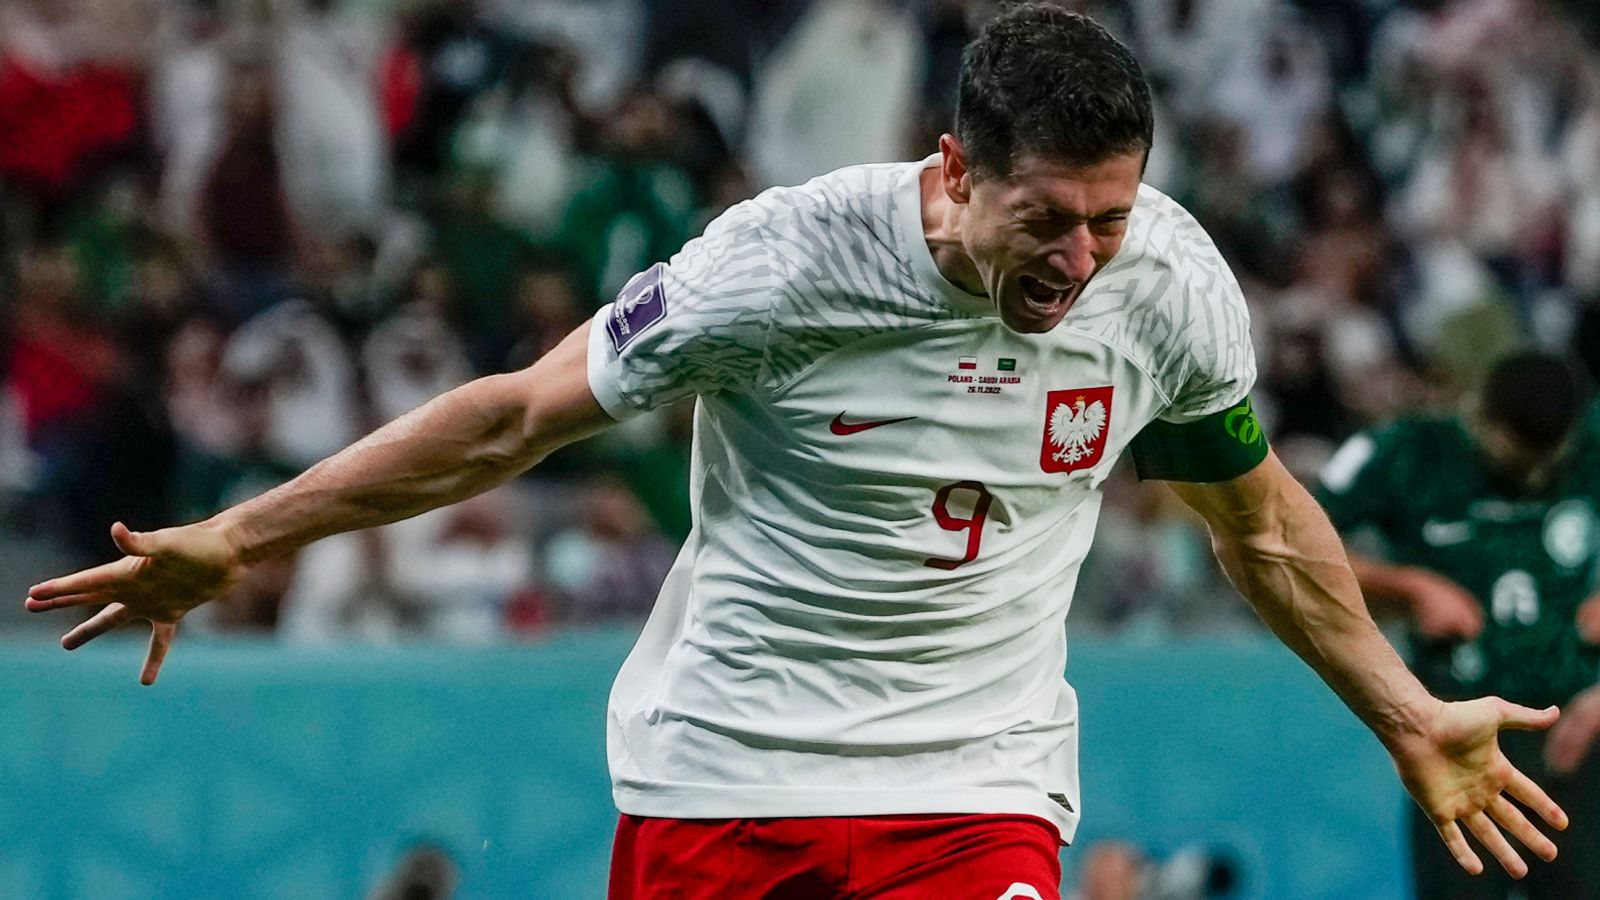 Poland 20 Saudi Arabia Robert Lewandowski scores first World Cup goal